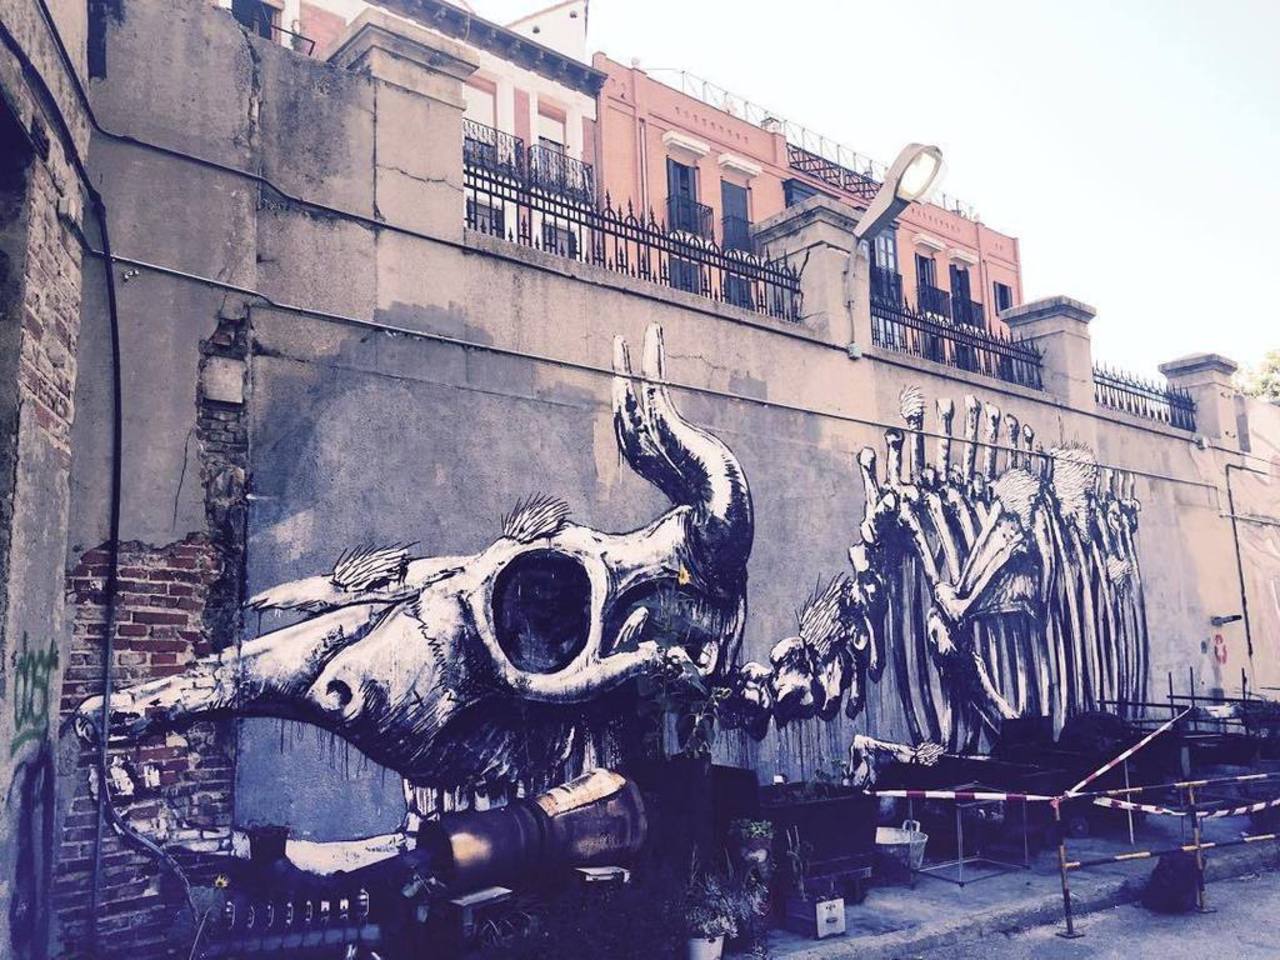 #streetart #streetartmadrid #tabacalera #graffiti #graffitiart #artwork by shock4fashion http://t.co/AUZ77O176c